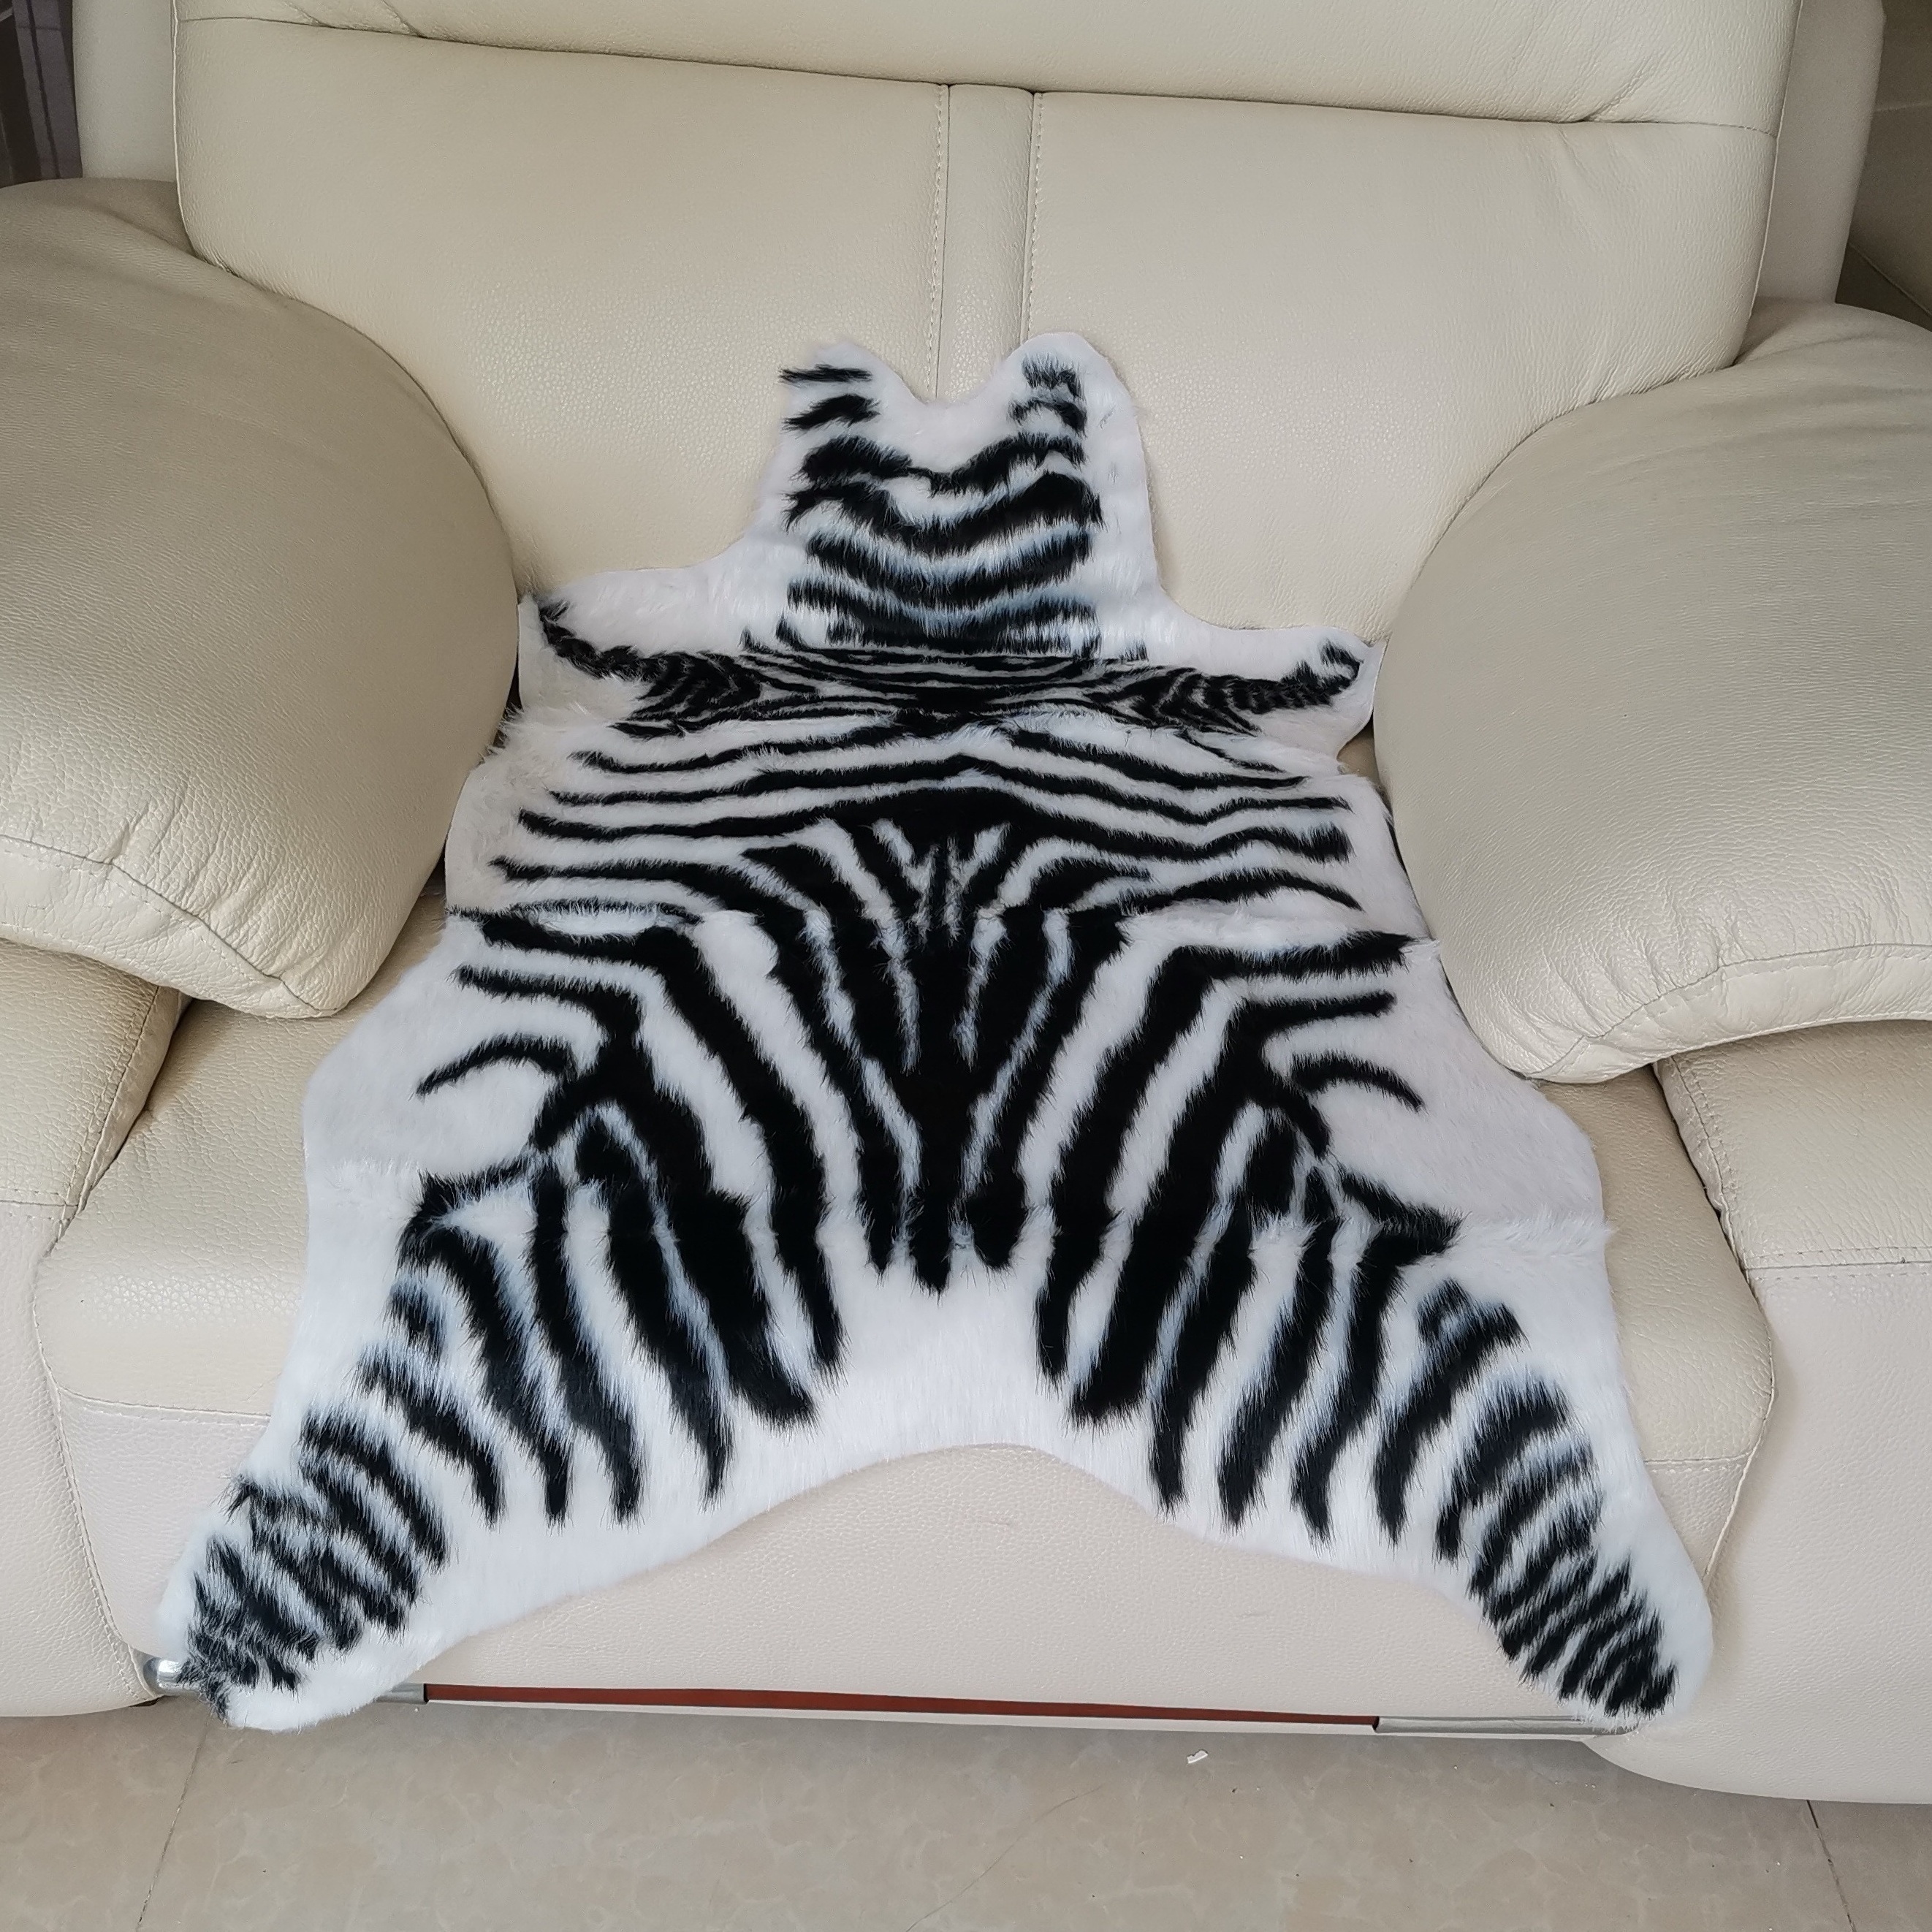 1pc Leopard Print Rug, 35.43*43.31inch/90*110cm Faux Fur Large Leopard Hide  Rug Animal Printed Rug Carpet Perfectly In Home Office Livingroom, Bedroom